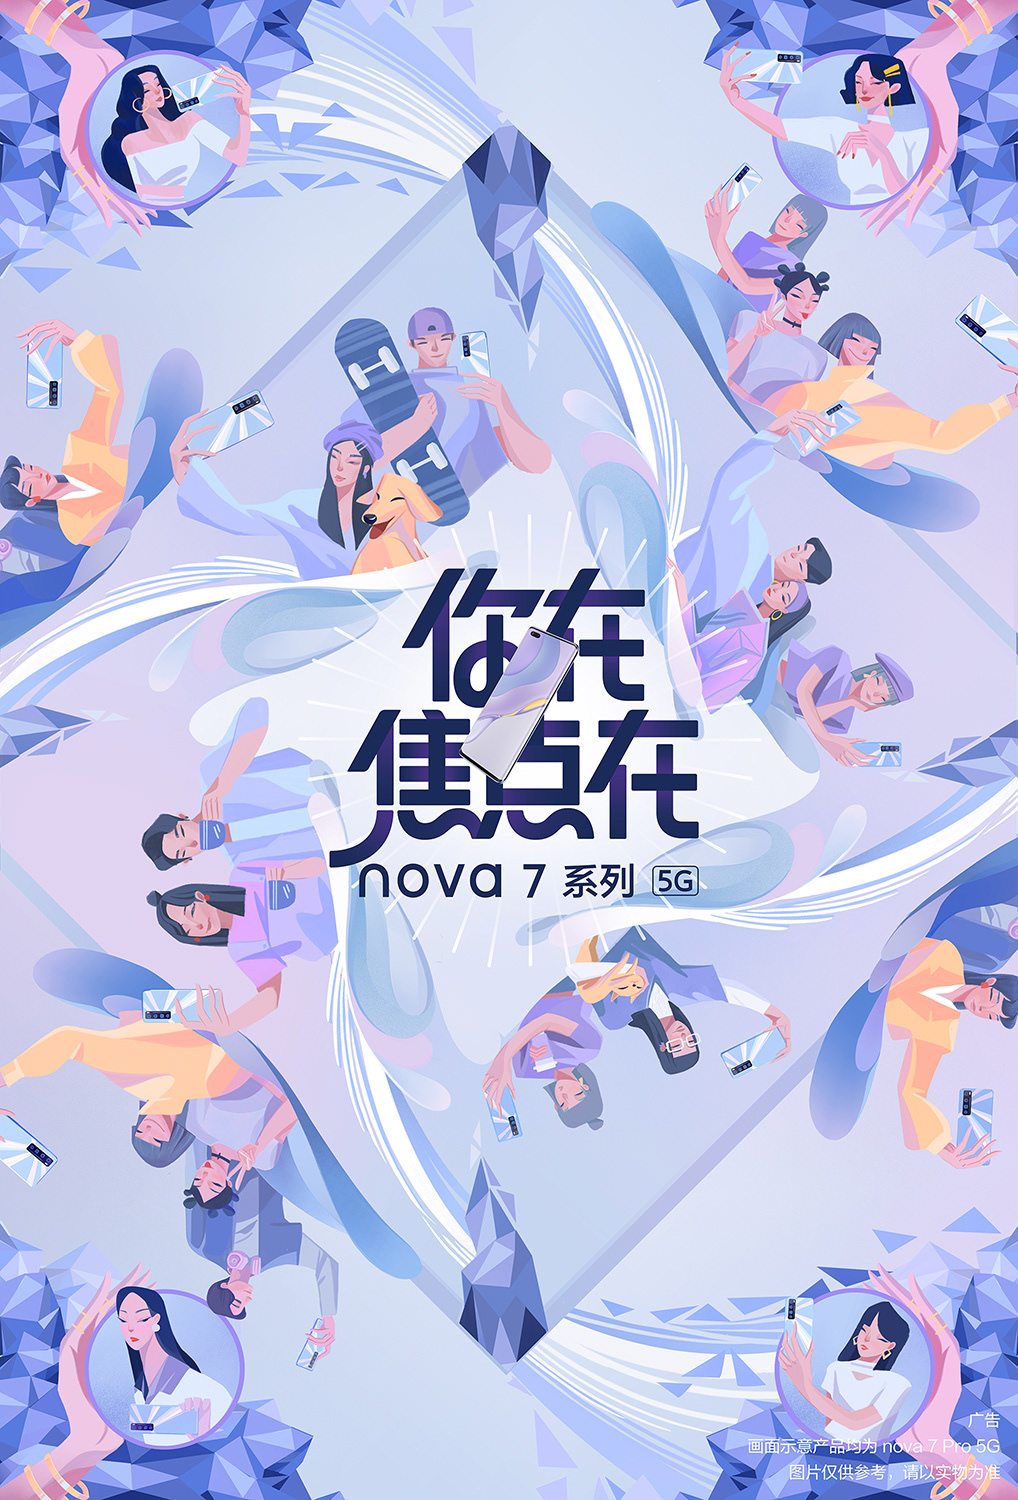 Advertising  huawei ILLUSTRATION  Key Vision Nova selfie 主视觉 华为 广告 插画